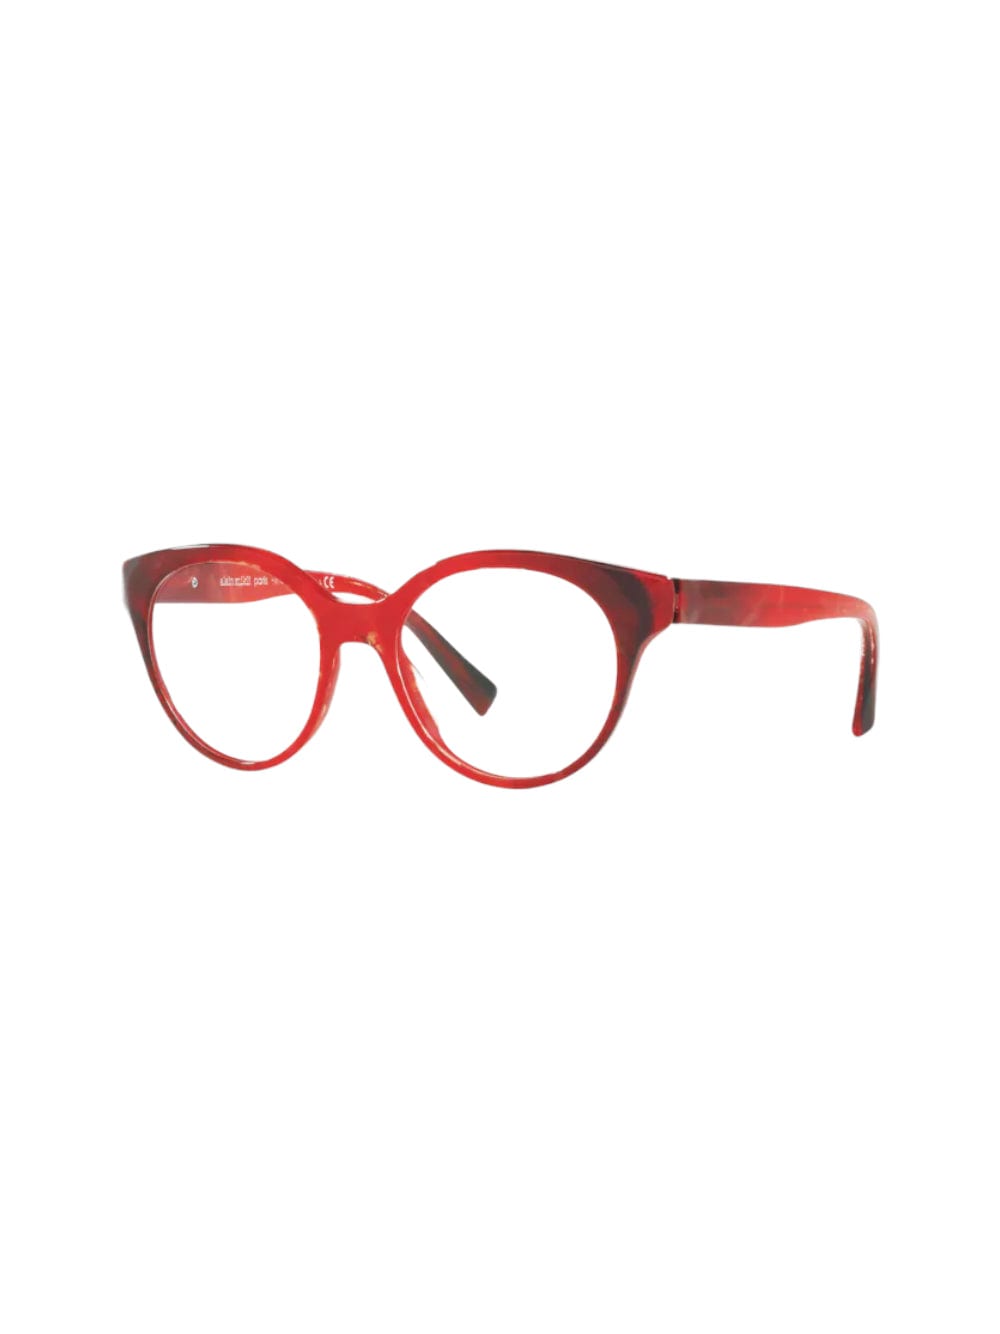 Alain Mikli Madolyn - 3097 - Red / Black Glasses